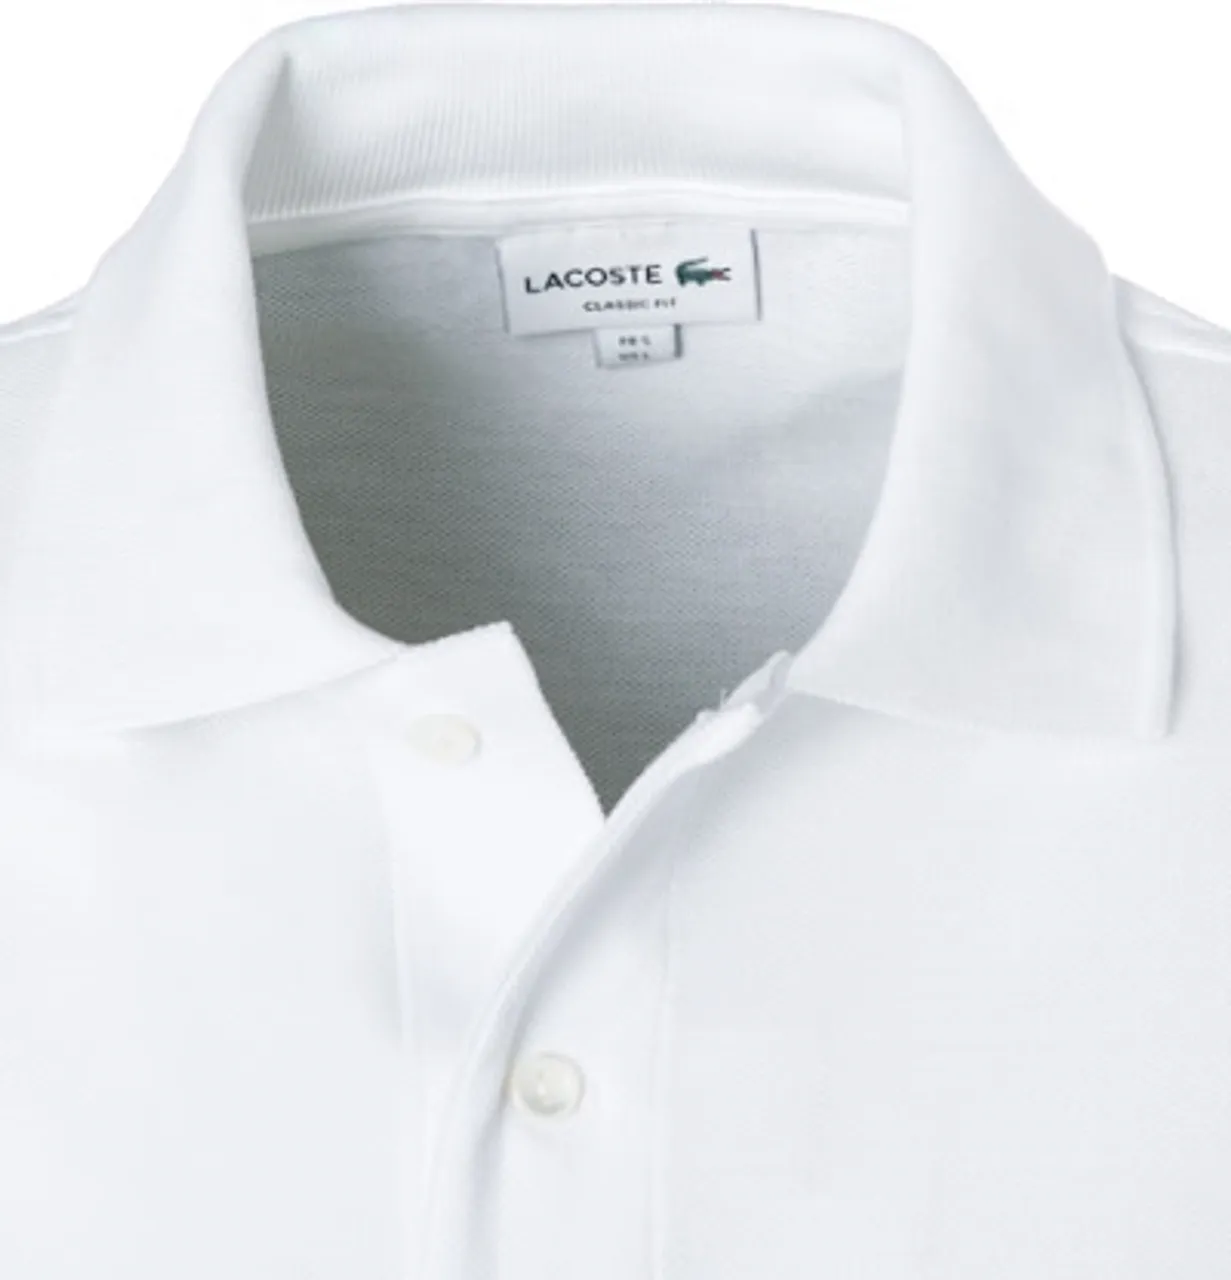 LACOSTE Herren Polo-Shirt weiß Baumwoll-Piqué Classic Fit